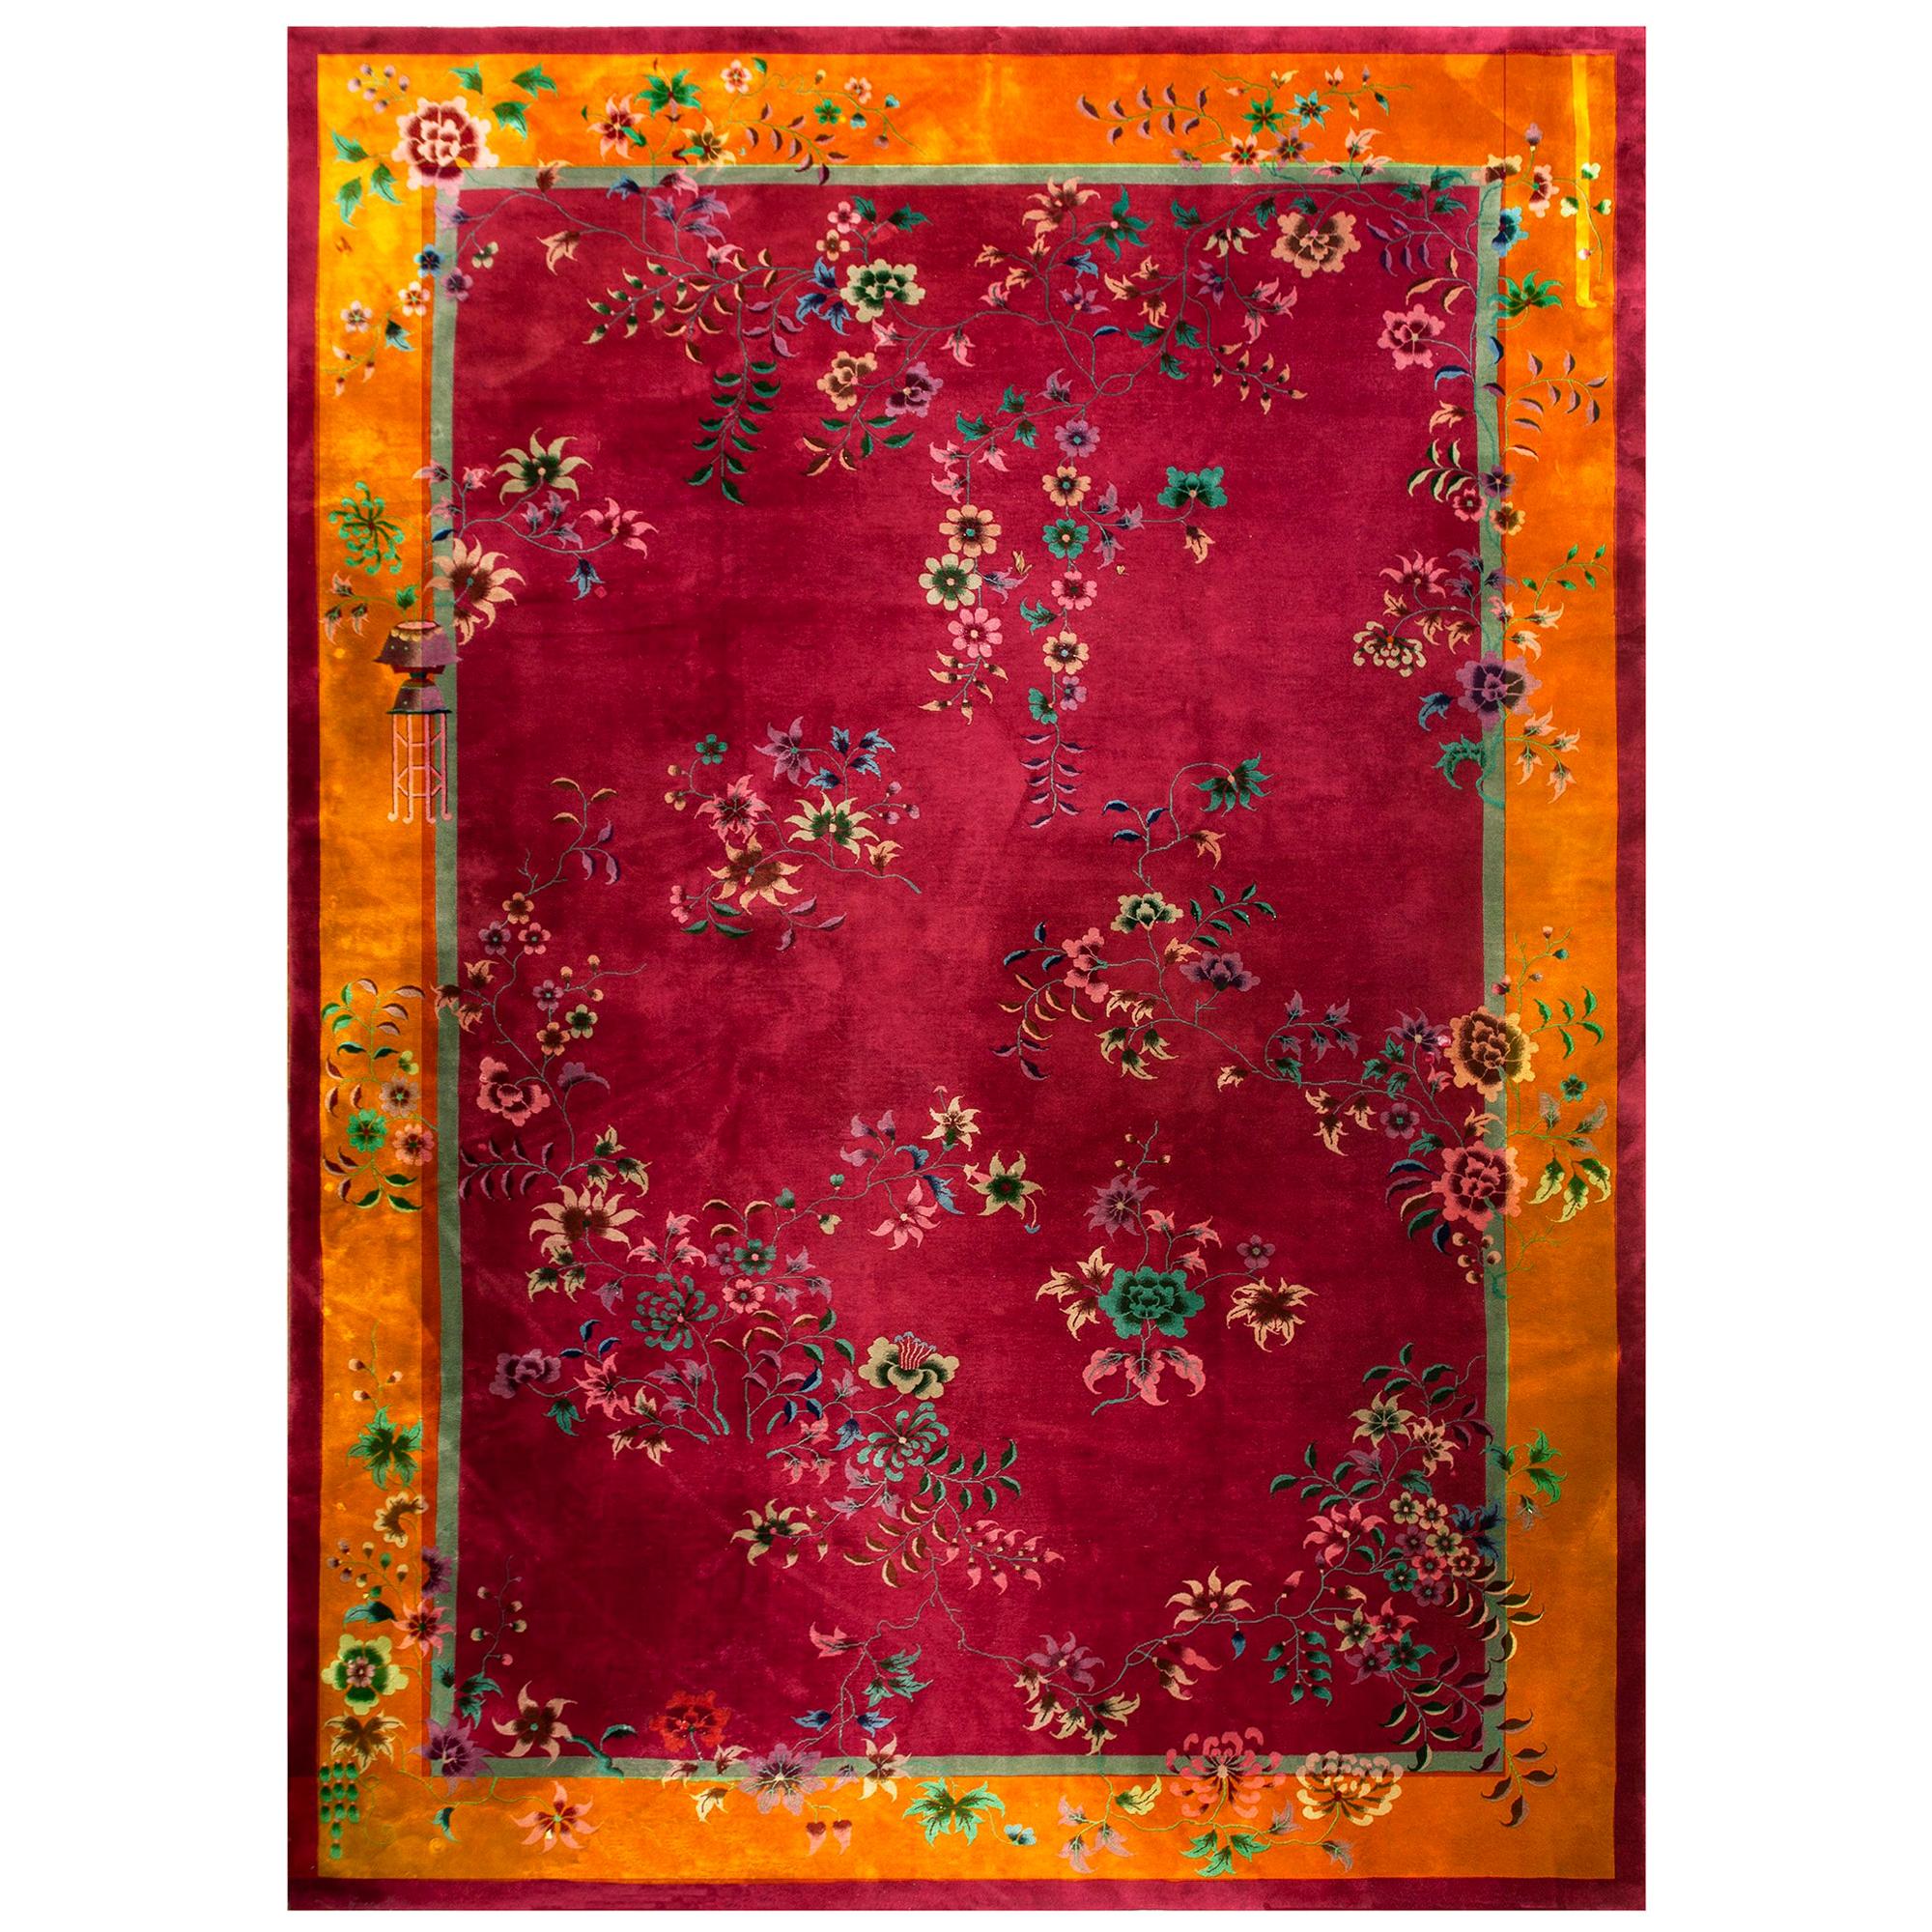 1920s Chinese Art Deco Carpet ( 11'8" x 17'2" - 355 x 523 ) 